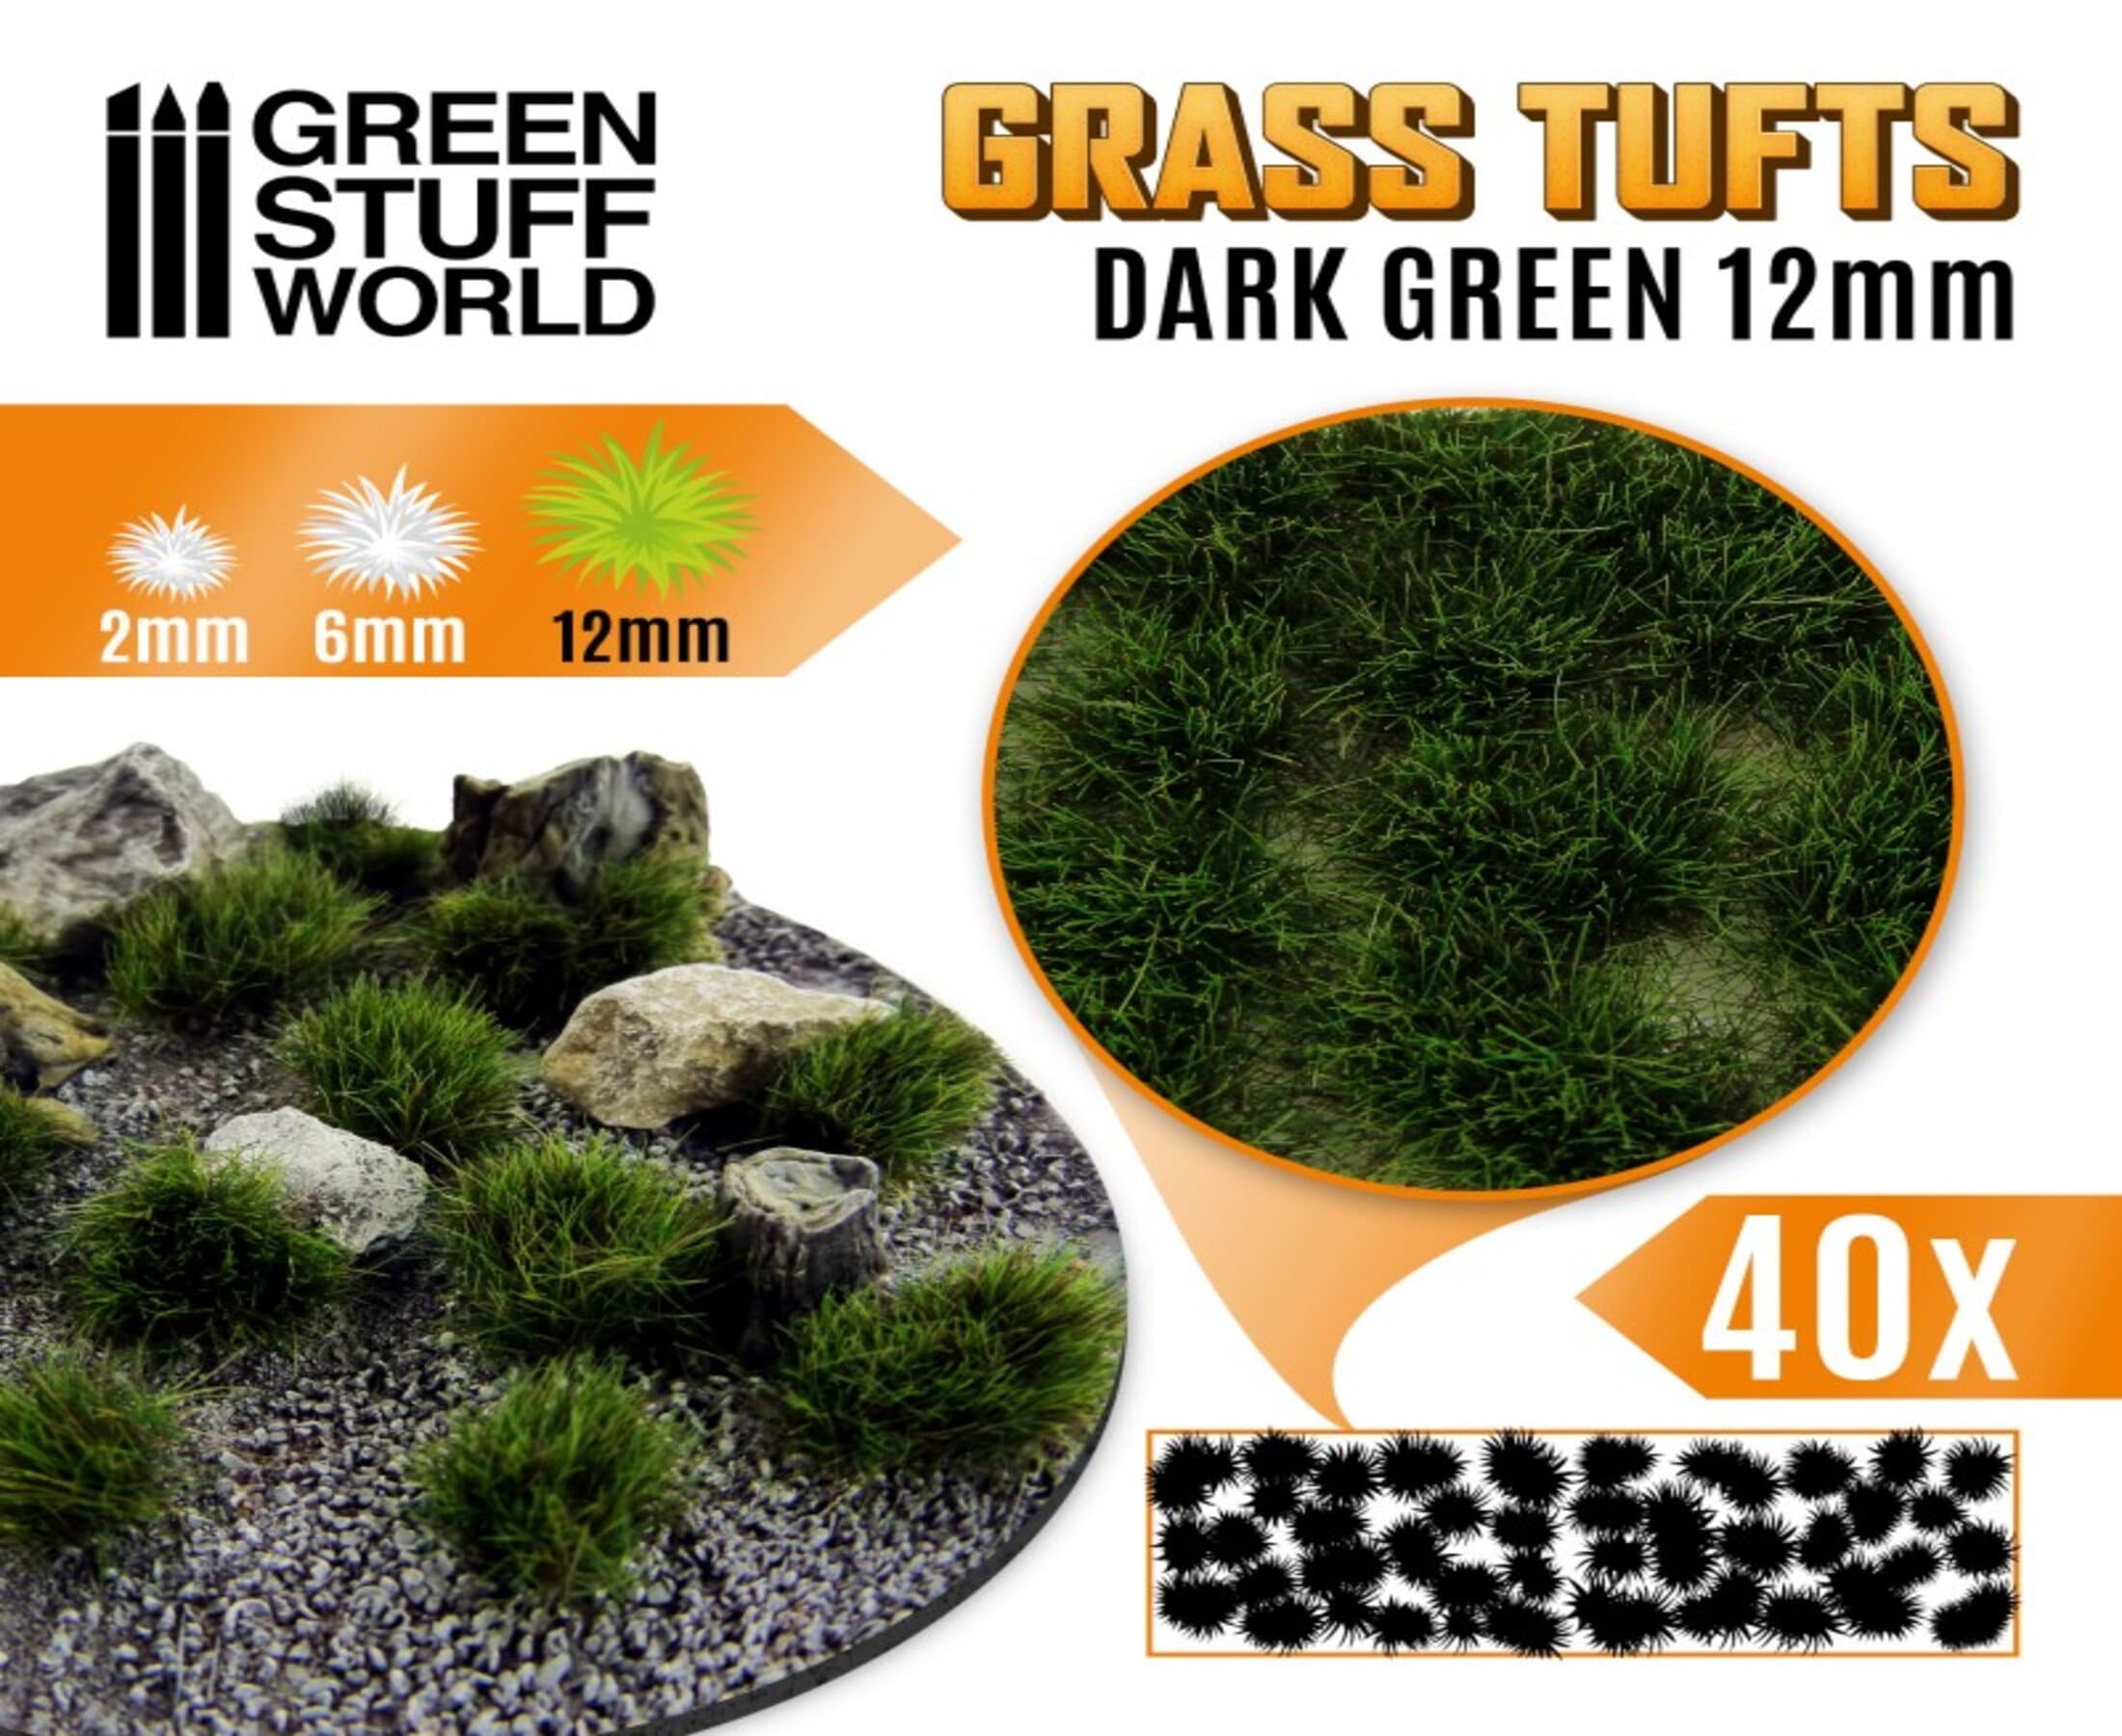 2mm short light green static grass, making tufts pathways